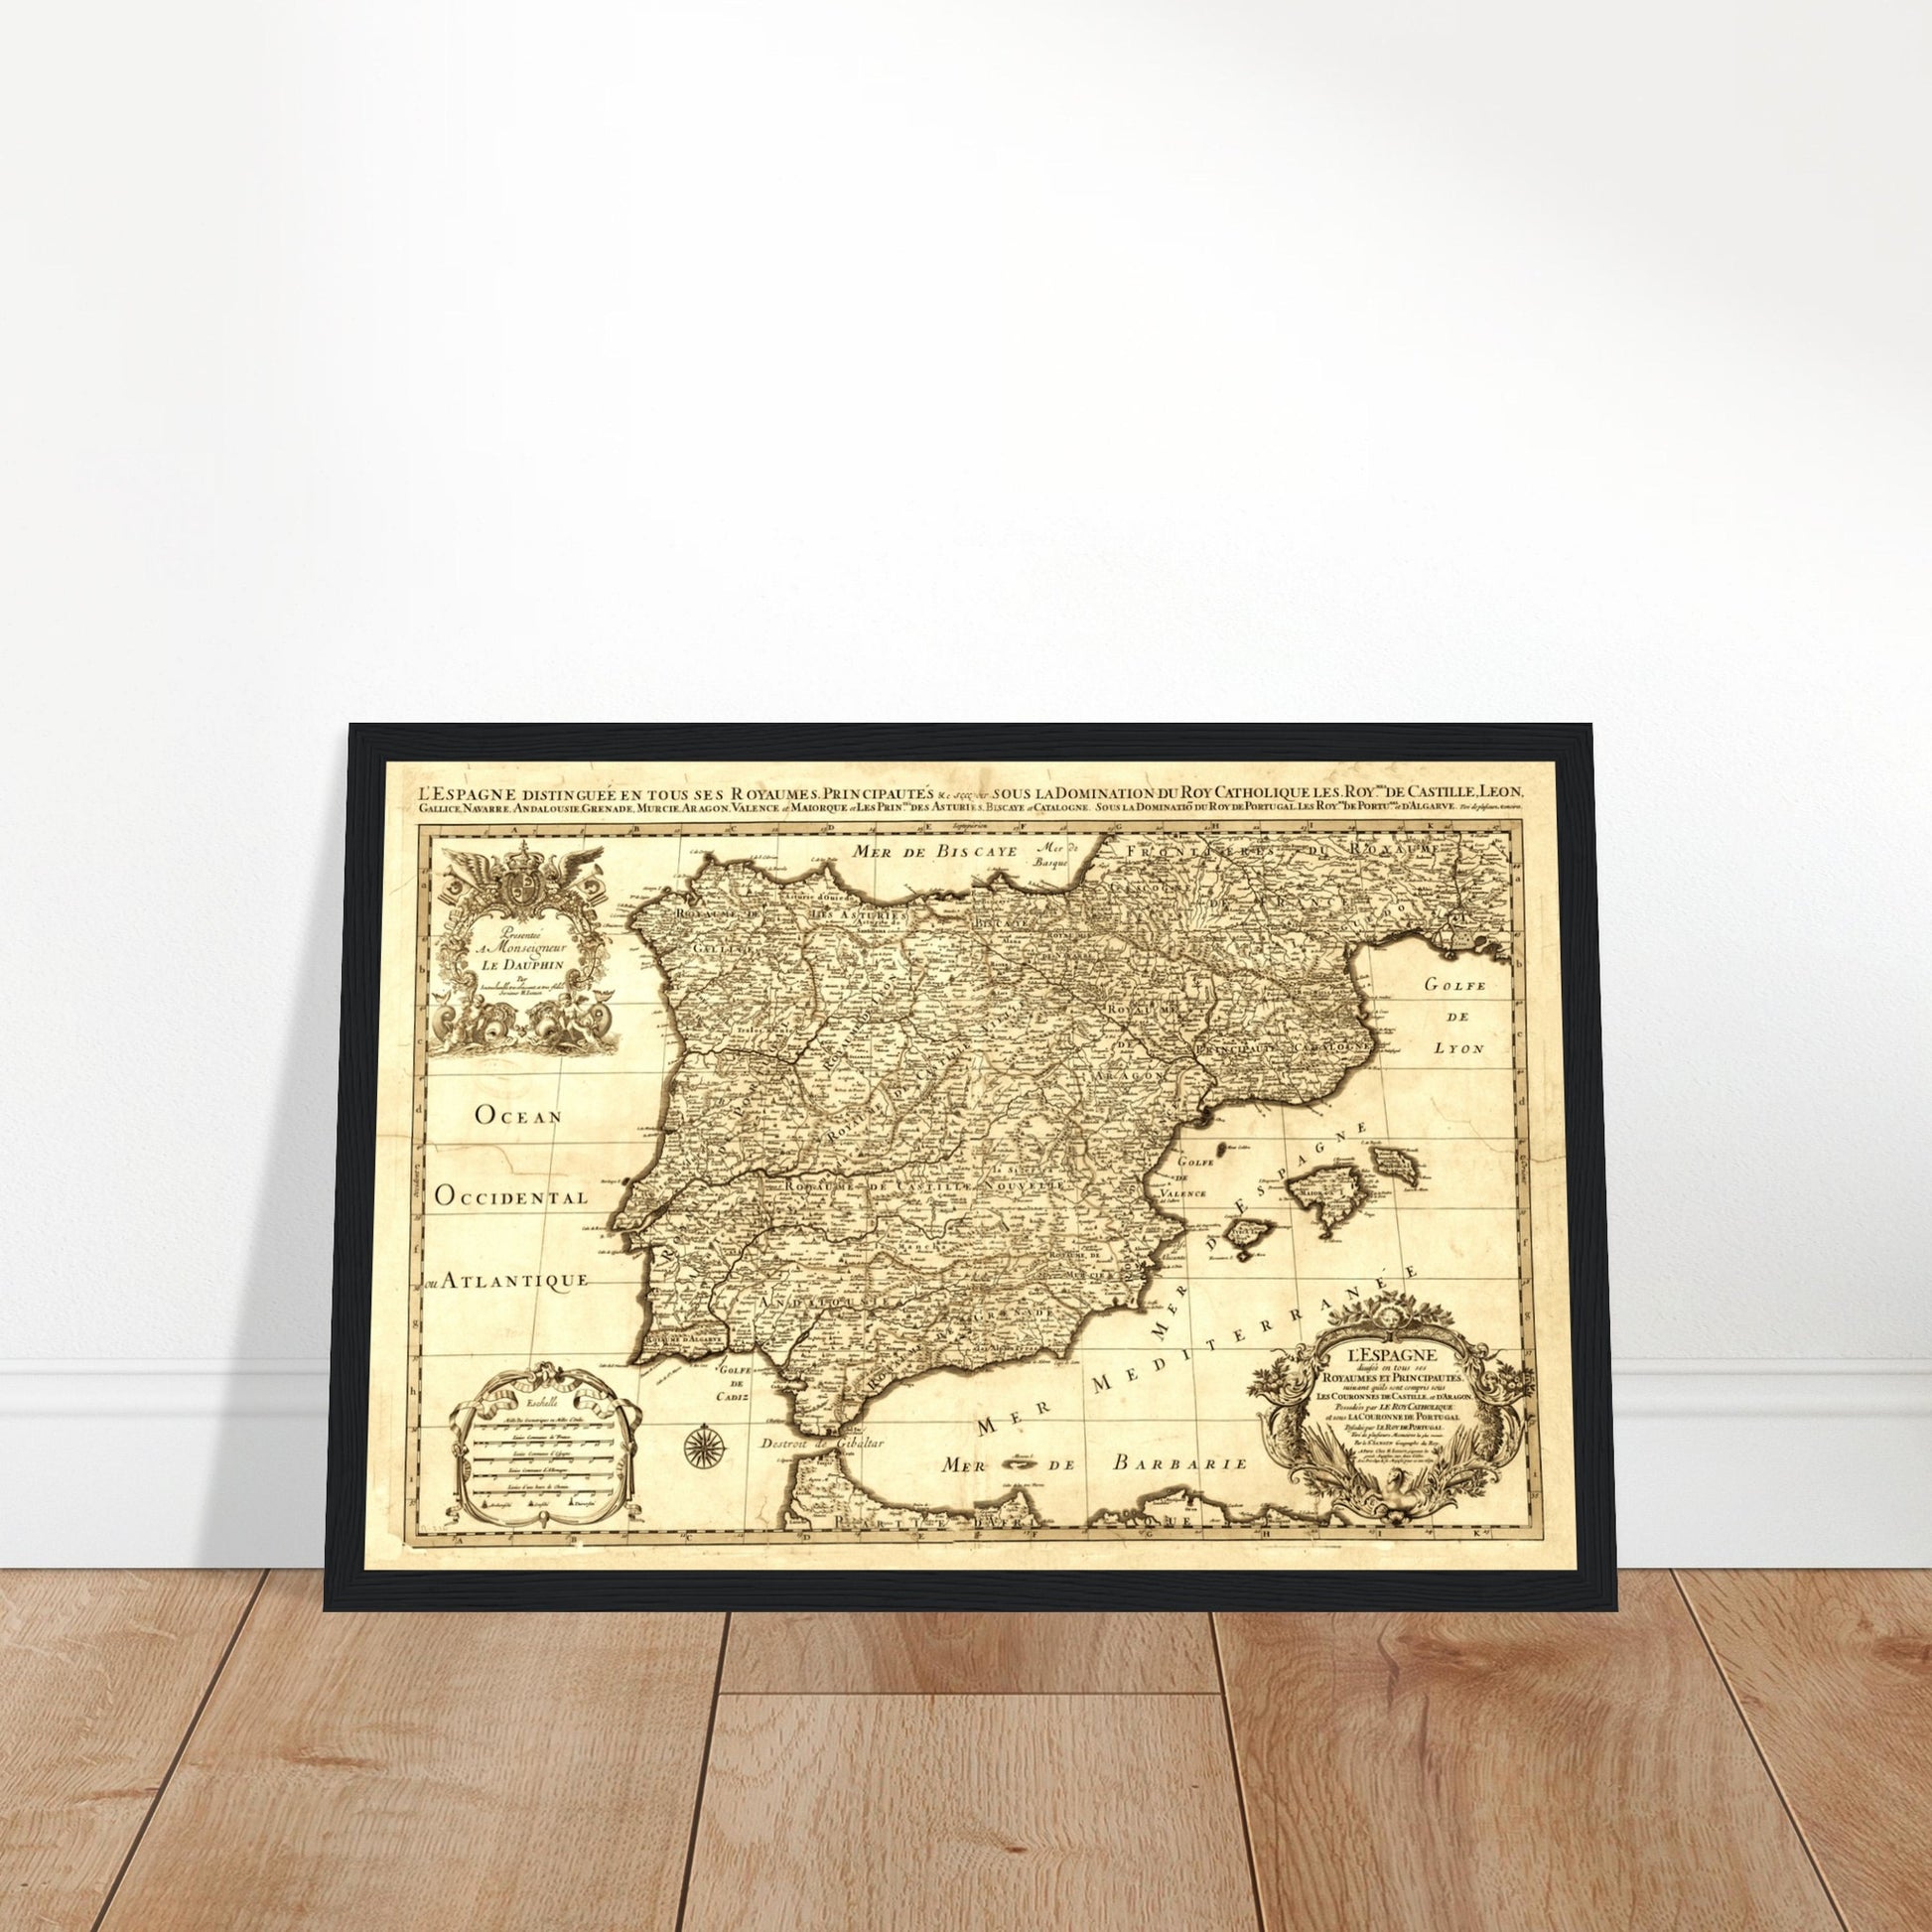 Vintage Map of Spain anno 1692 Reprint on Premium Matte Paper - Posterify